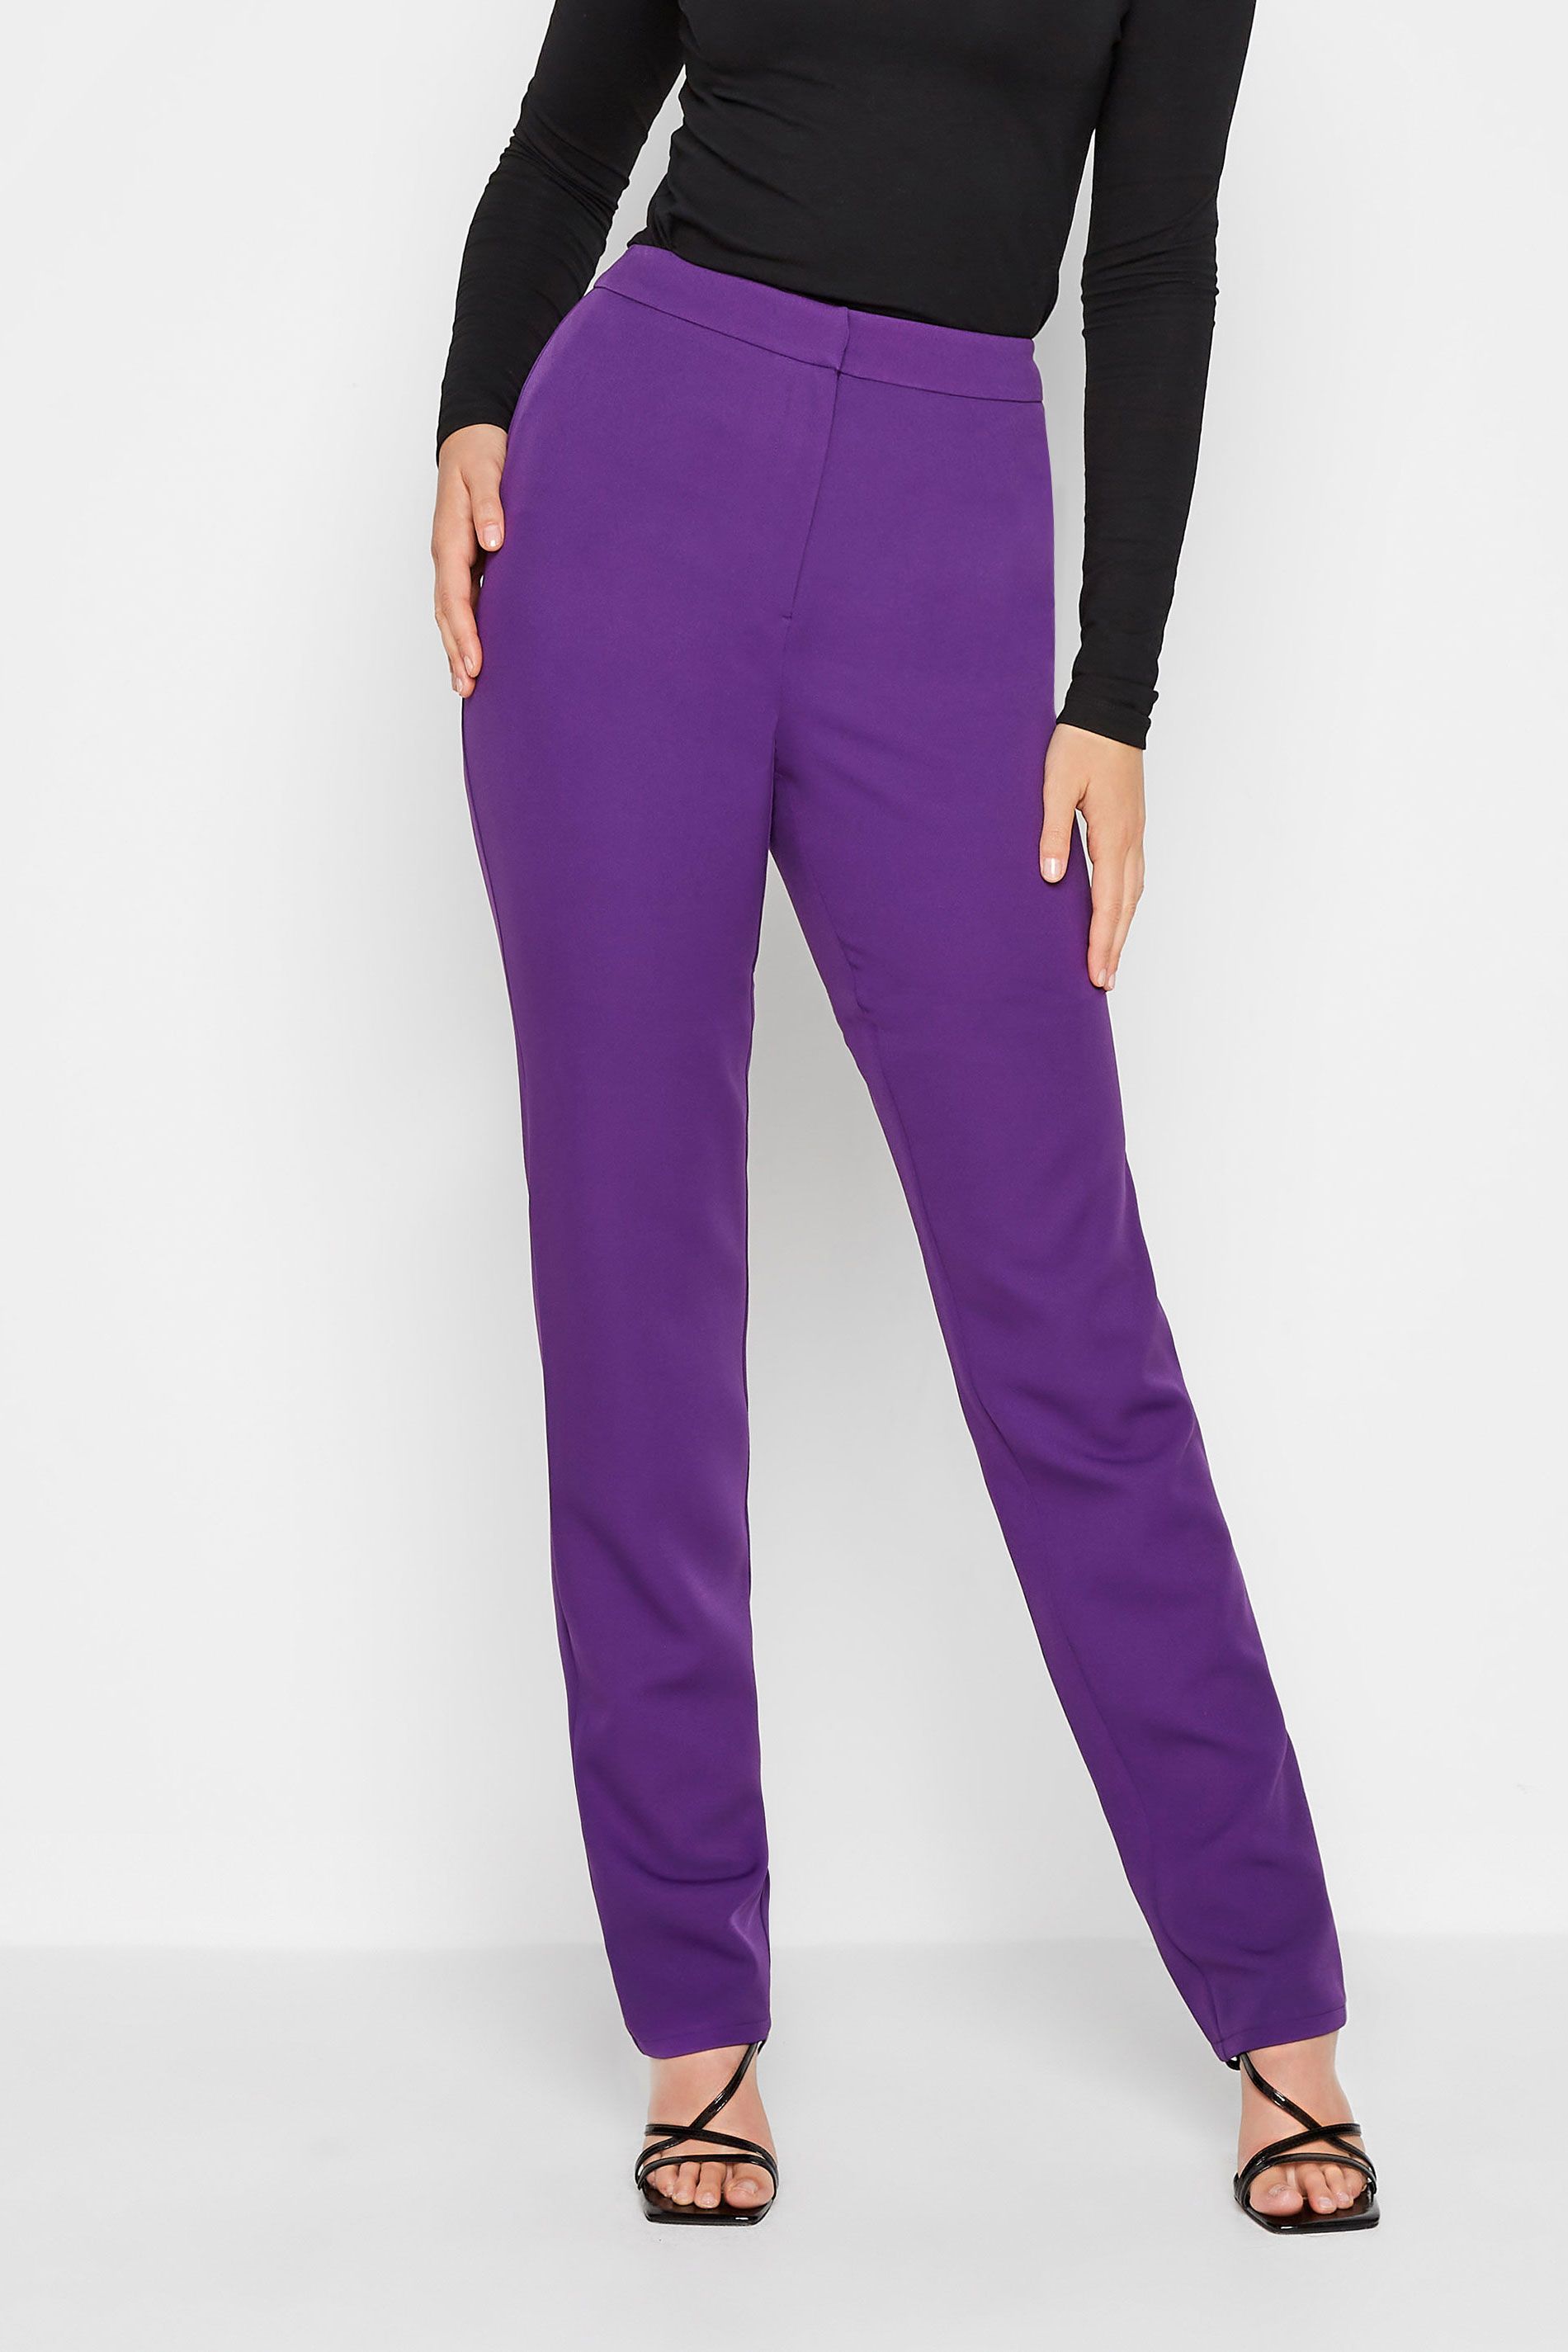 LTS Tall Purple Scuba Crepe Slim Leg Trousers | Long Tall Sally